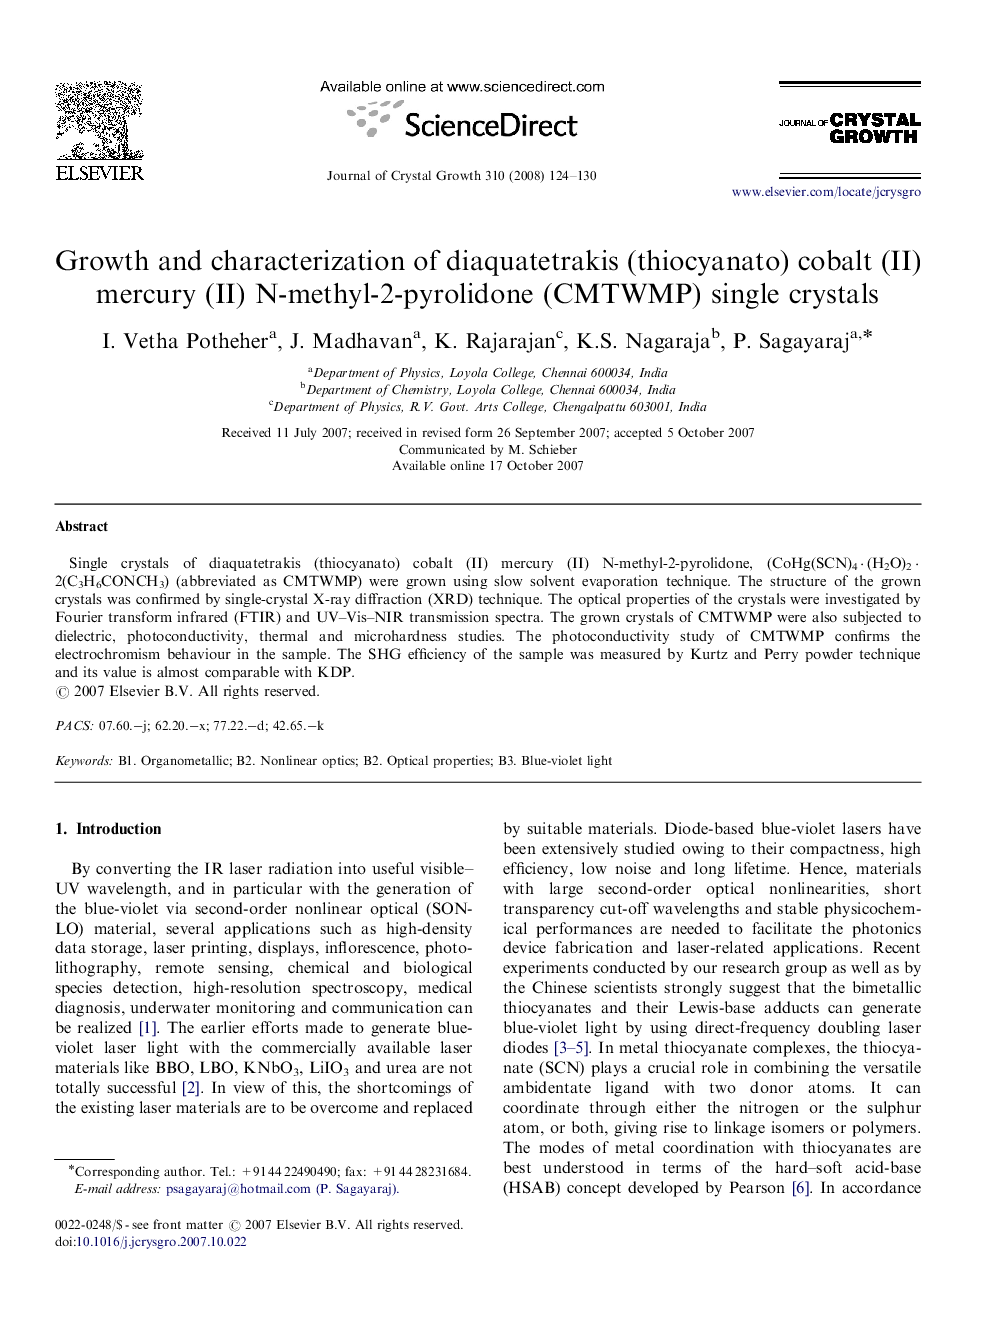 Growth and characterization of diaquatetrakis (thiocyanato) cobalt (II) mercury (II) N-methyl-2-pyrolidone (CMTWMP) single crystals